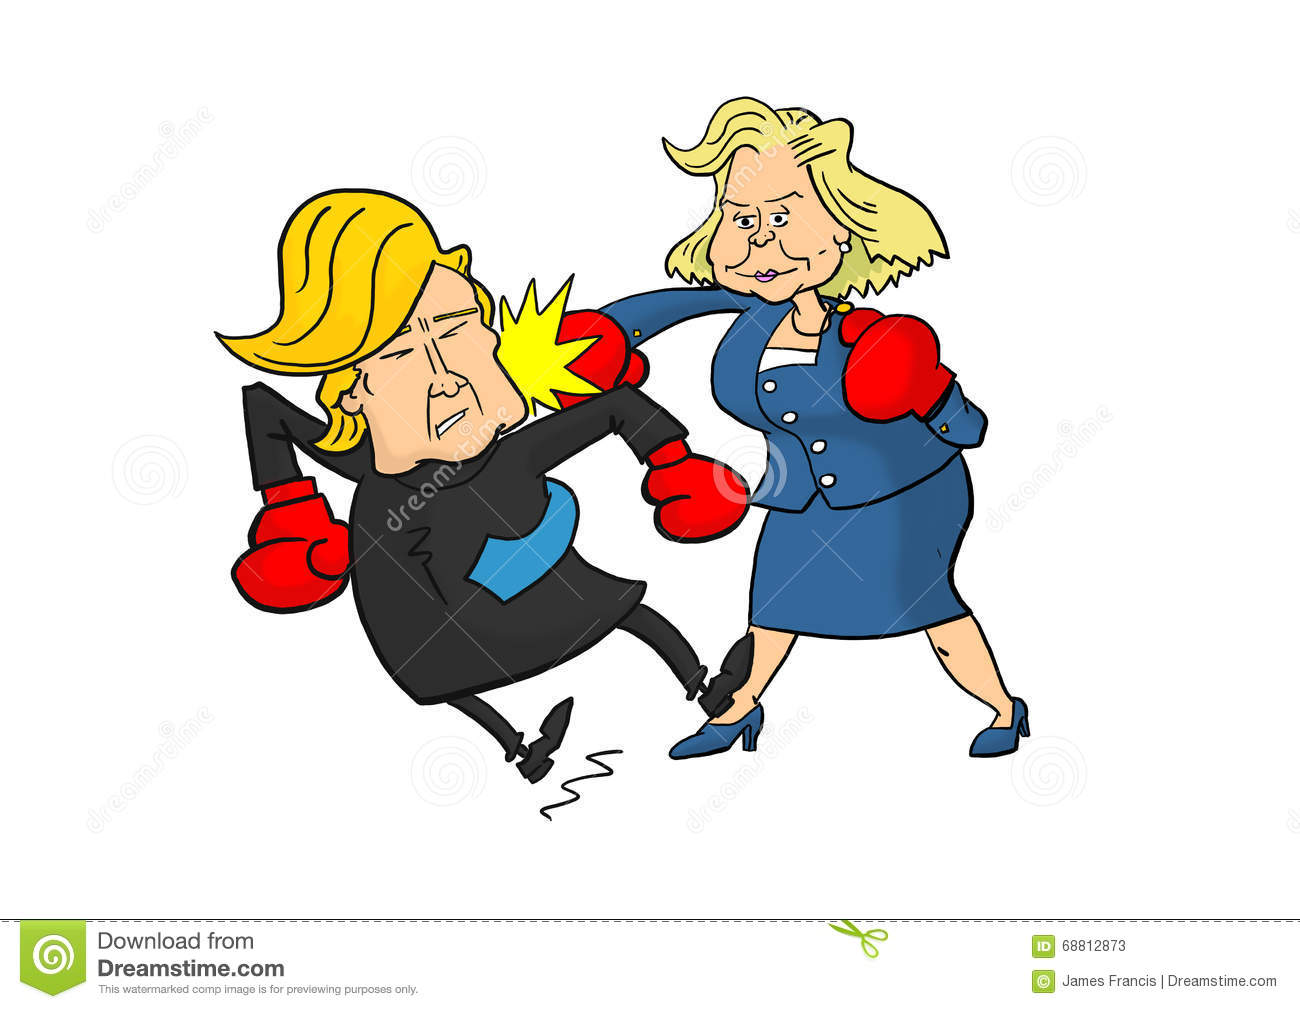 hillary-clinton-beating-donald-trump-fight-68812873.jpg